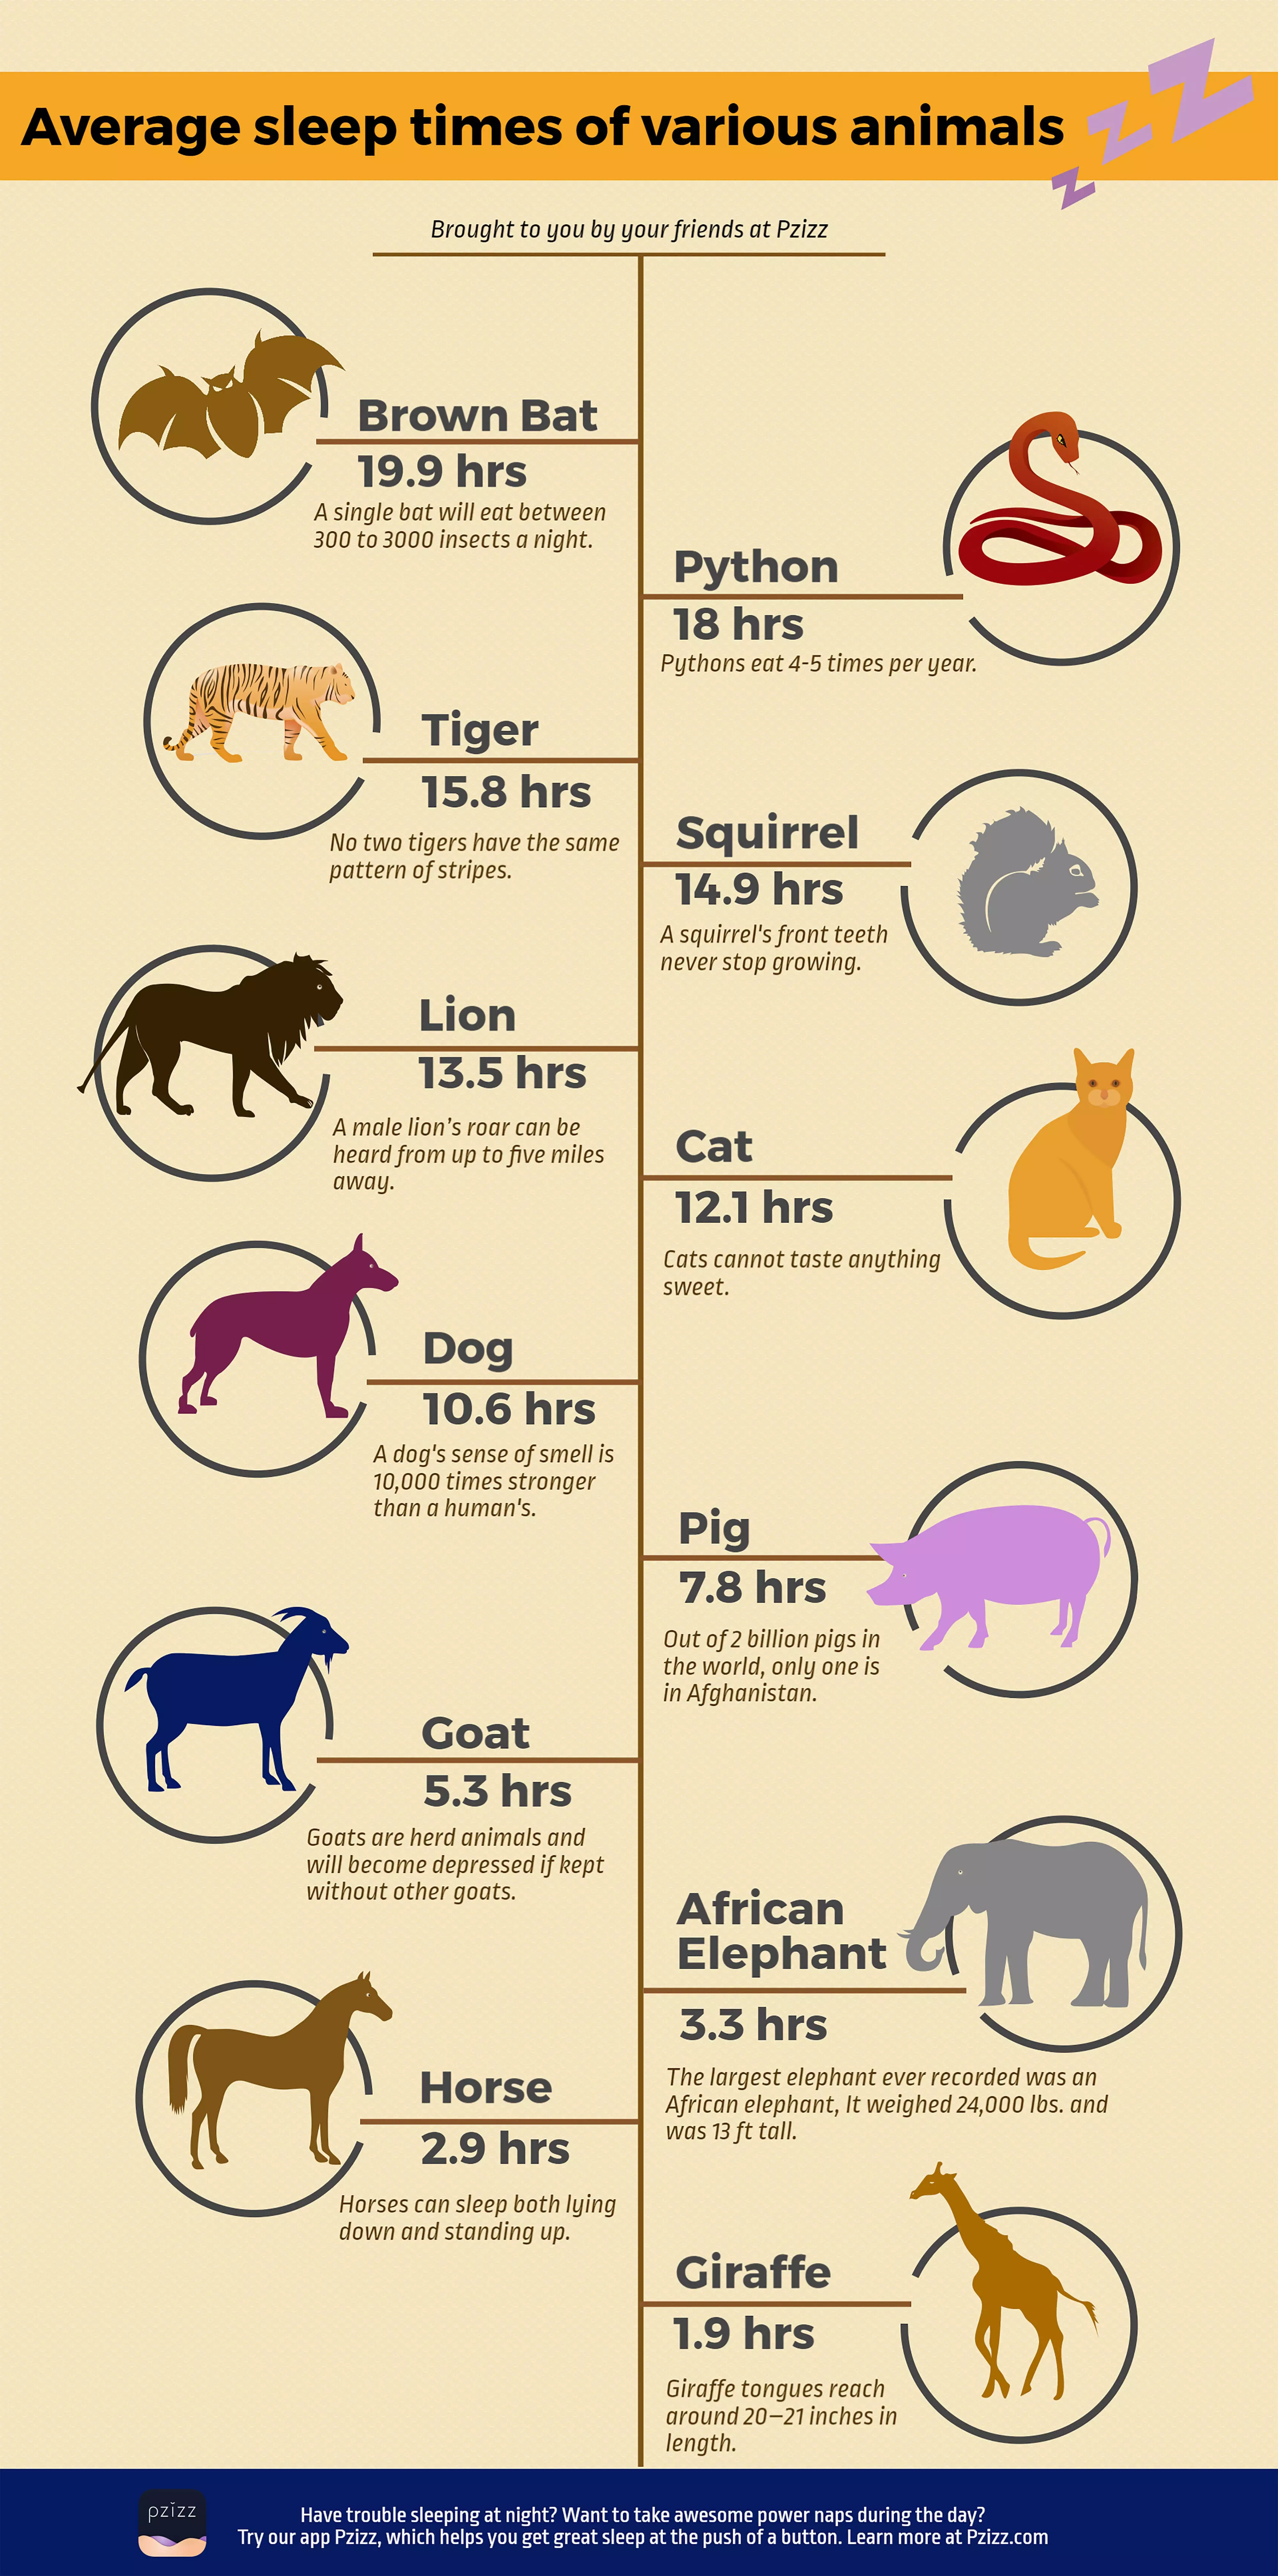 How many hours of sleep do animals need?